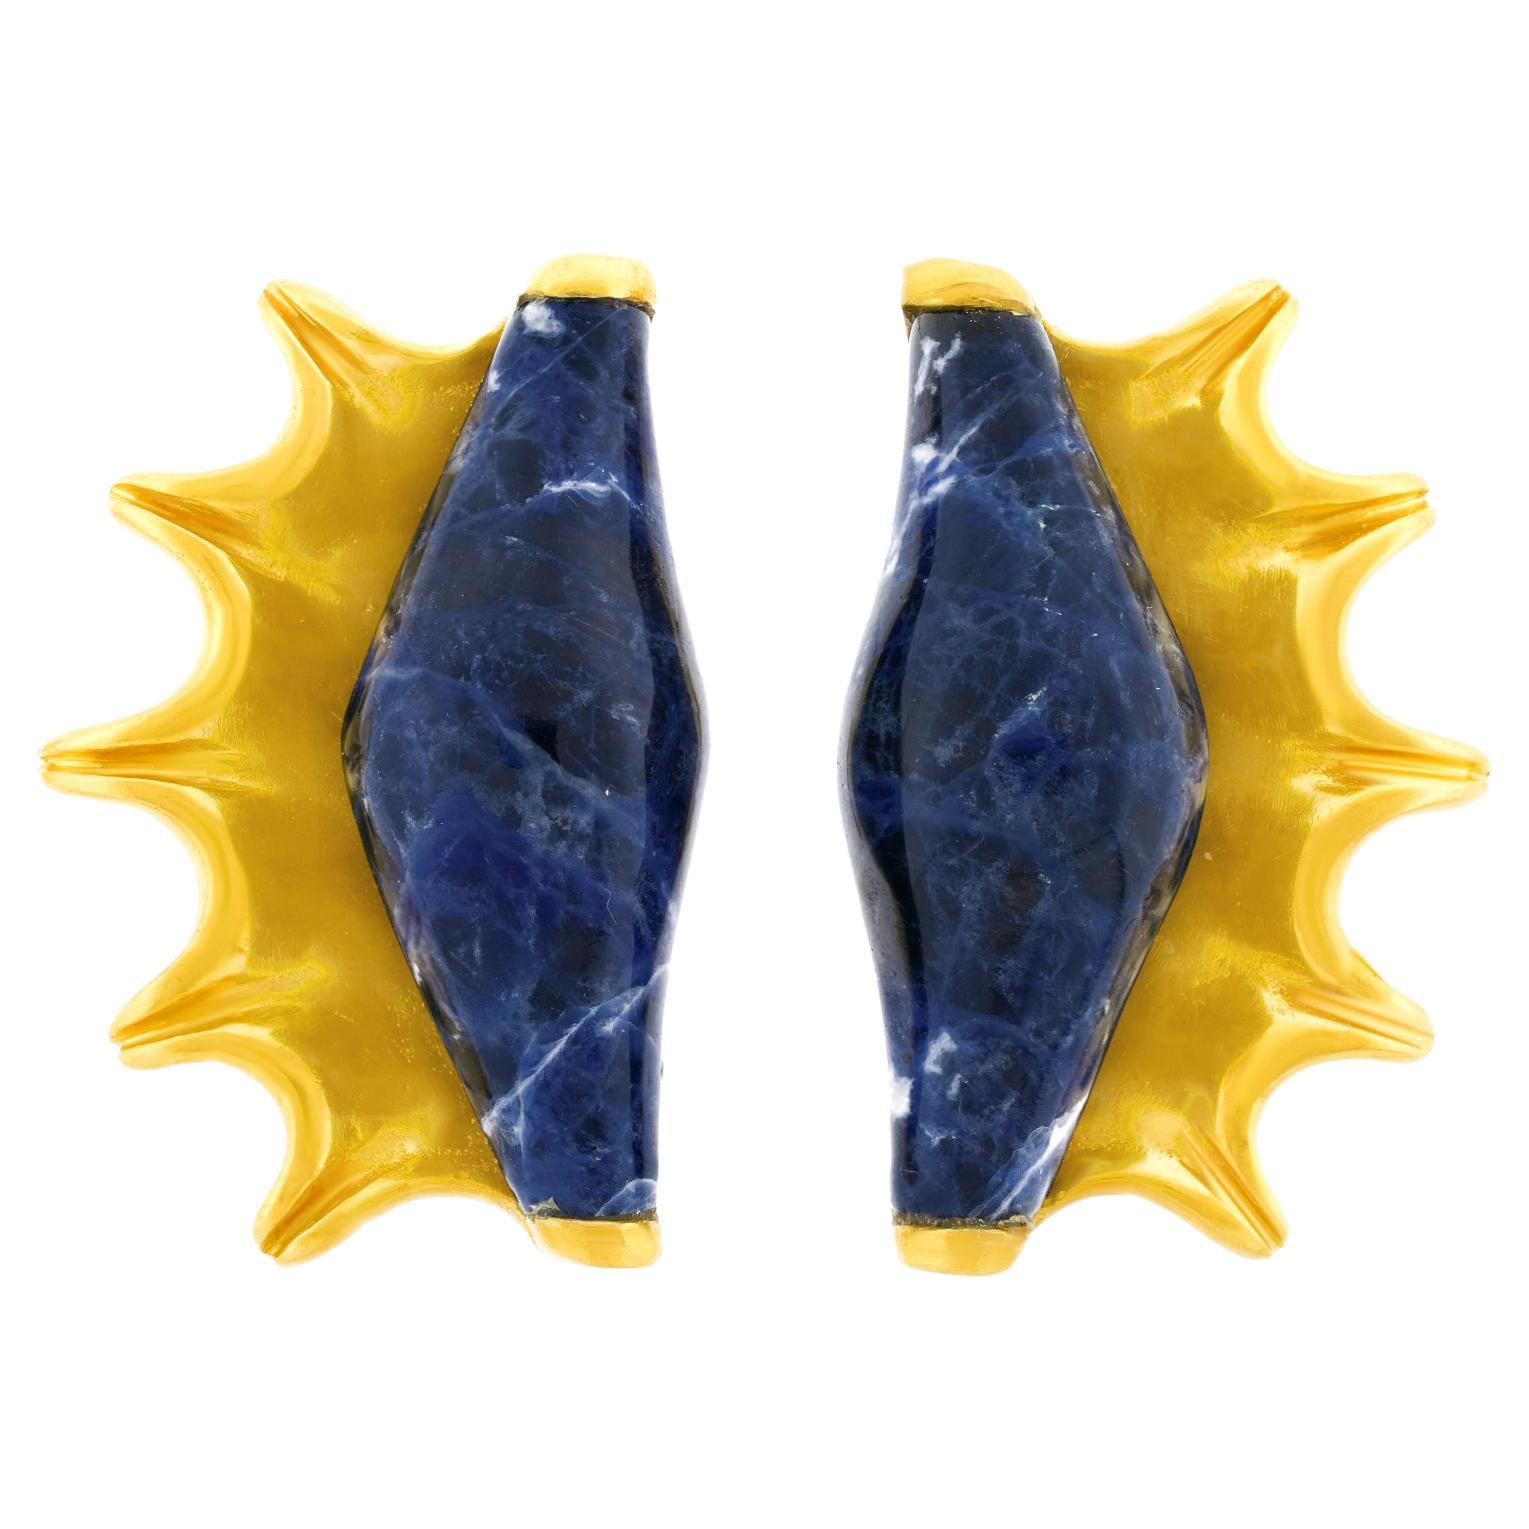 Lalaounis Shell Form Earrings 22k